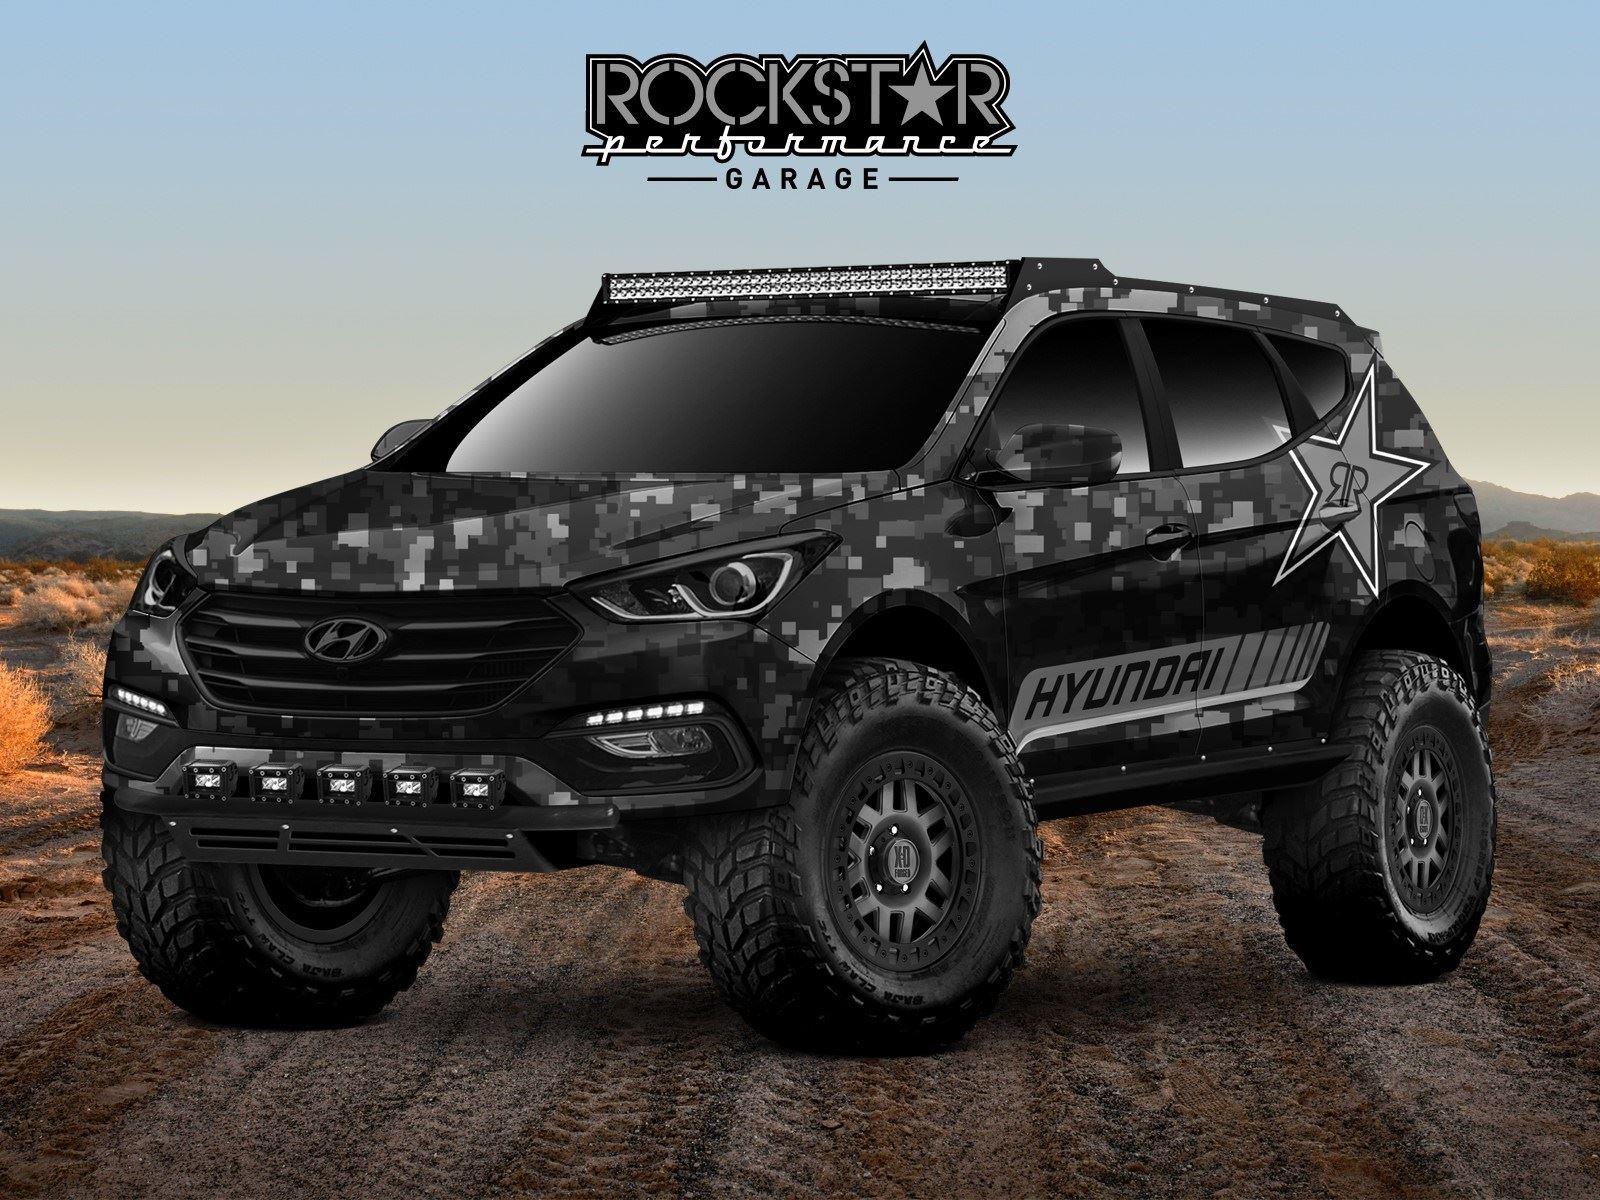 2017 Hyundai Rockstar Energy Moab Extreme Concept